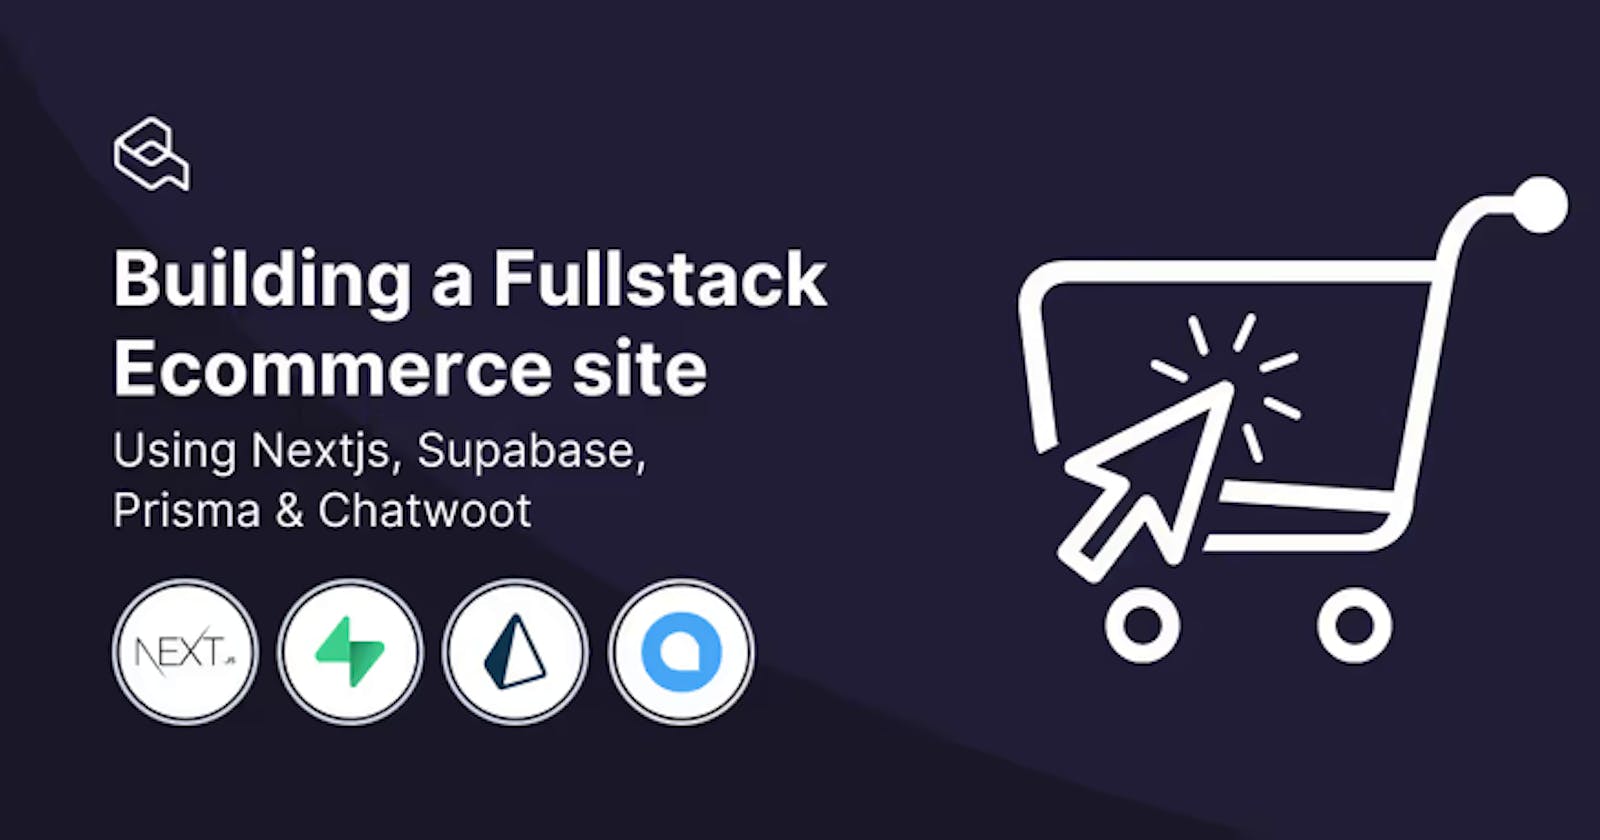 Fullstack eCommerce site using Nextjs, Supabase, Prisma and chatwoot.